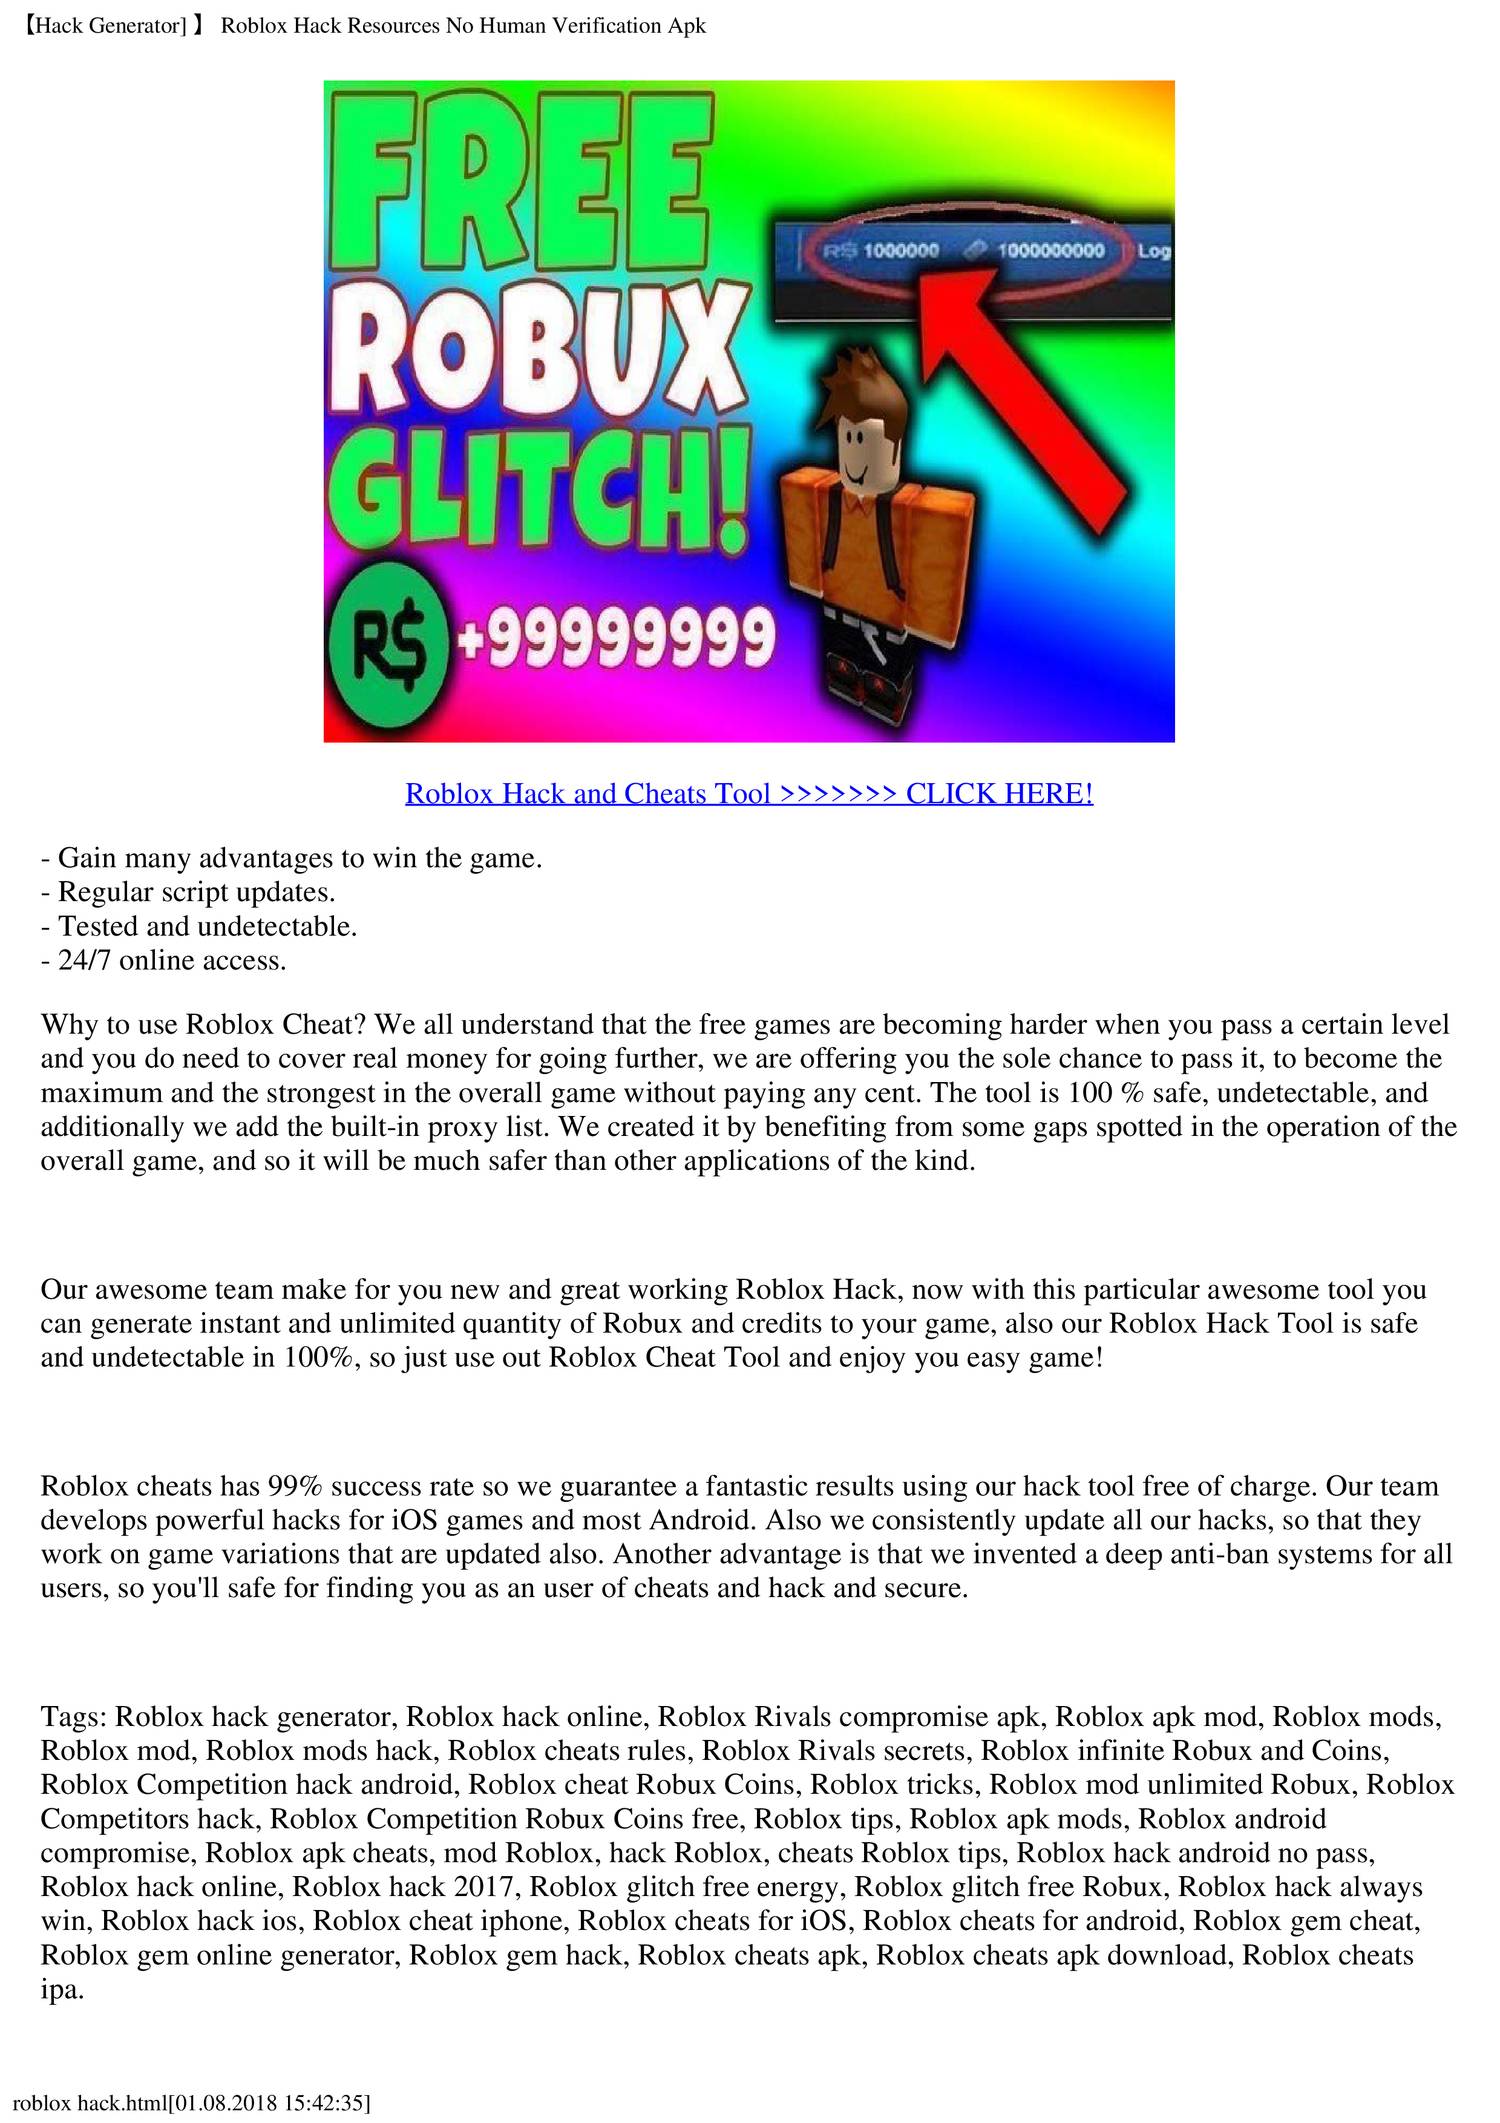 Unlimited robux glitch 2018